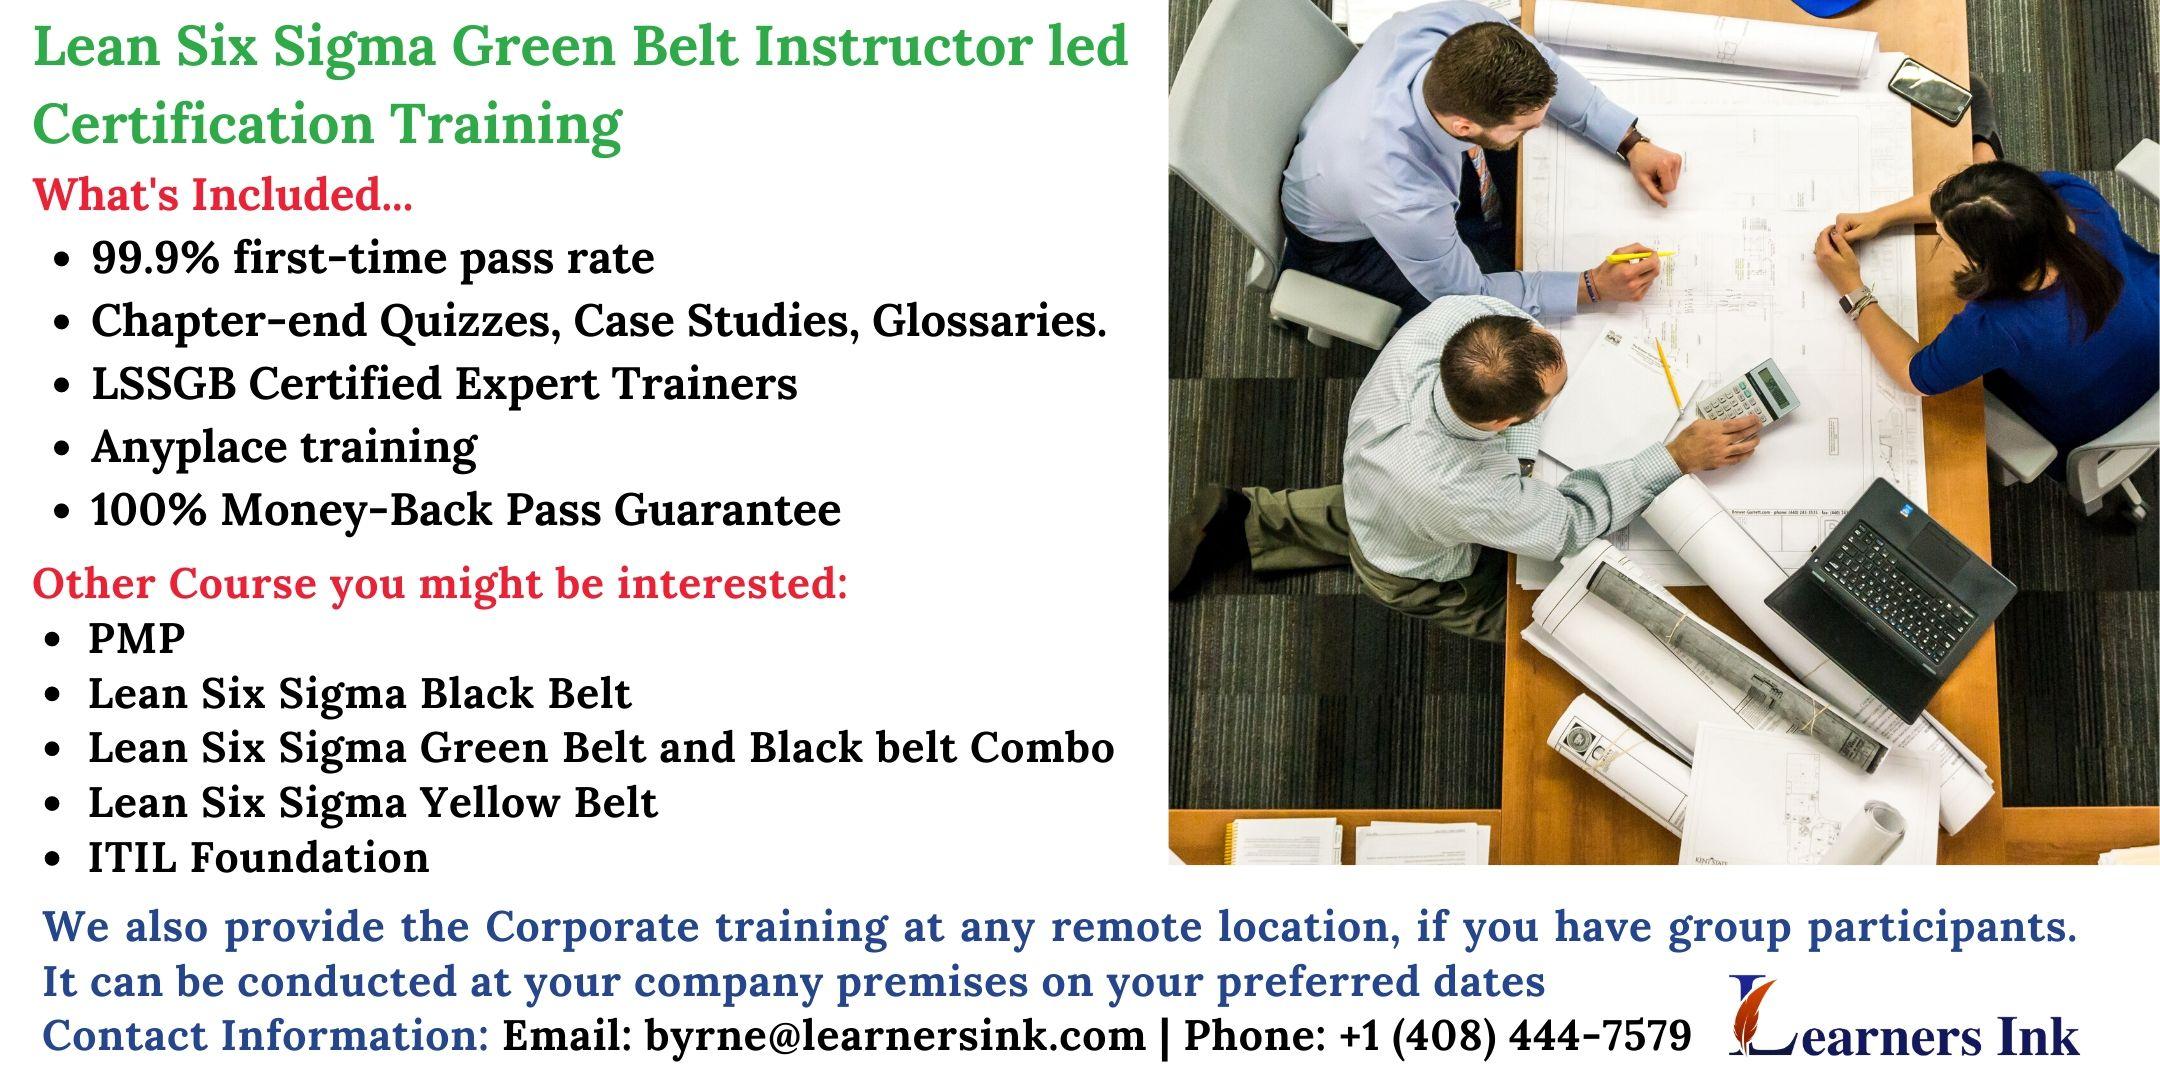 Lean Six Sigma Green Belt Certification Training Course (LSSGB) in Torrance